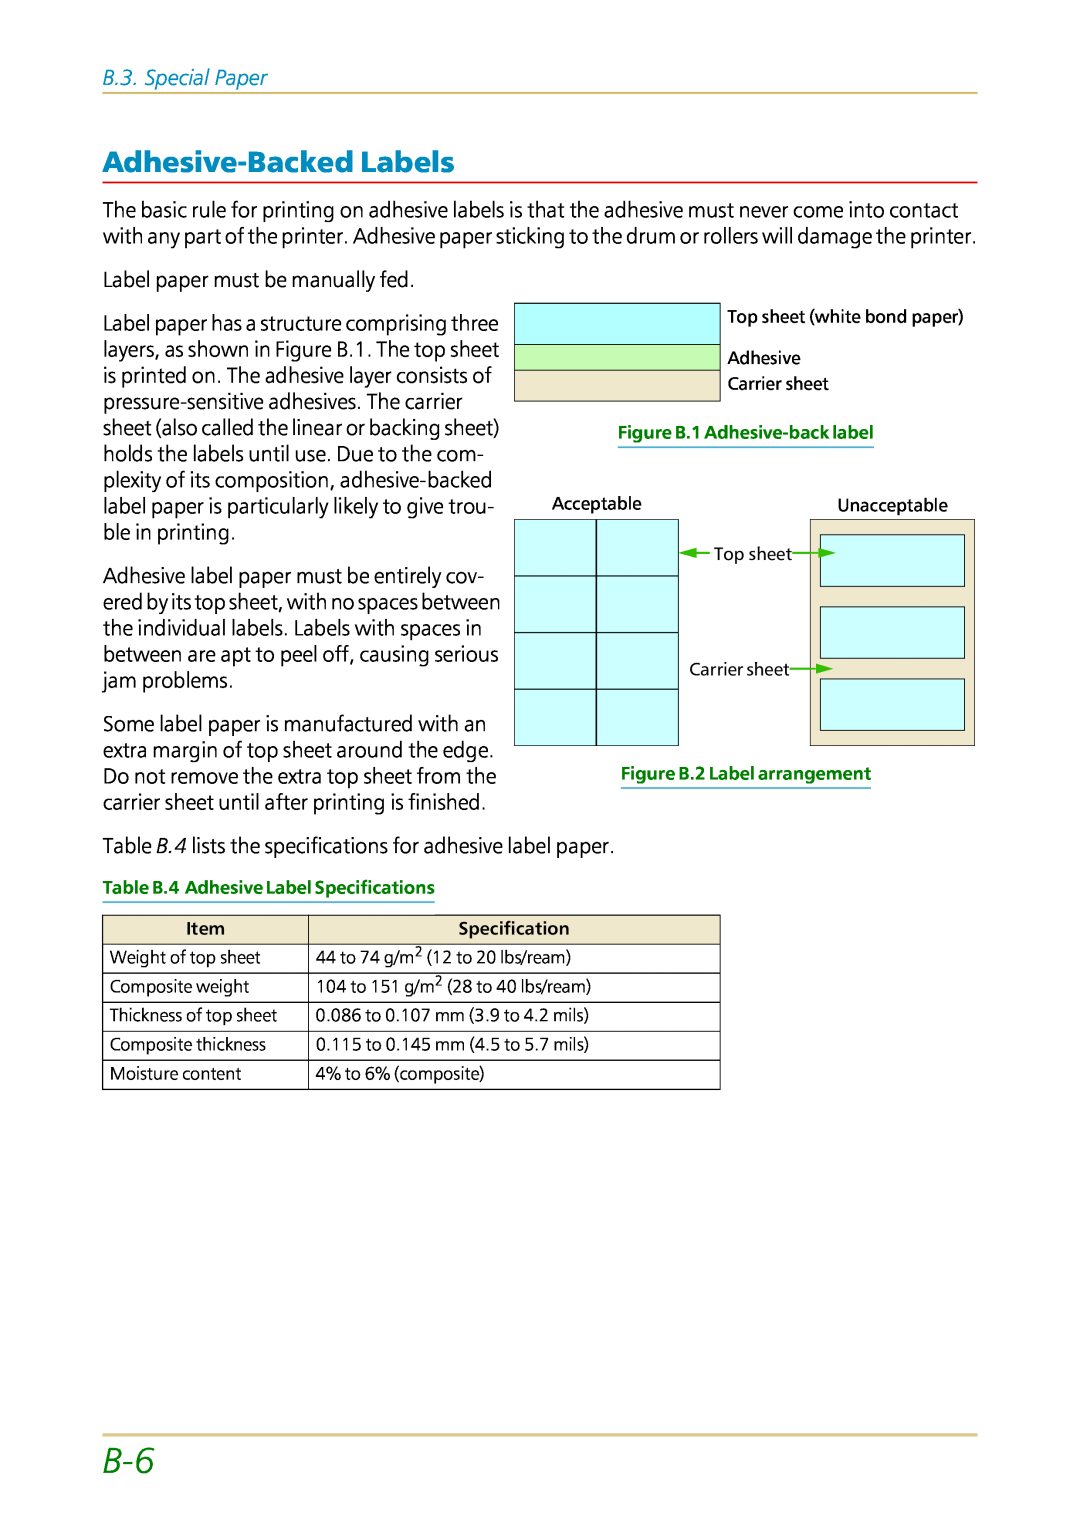 Kyocera FS-1700 user manual Adhesive-BackedLabels, B.3. Special Paper 